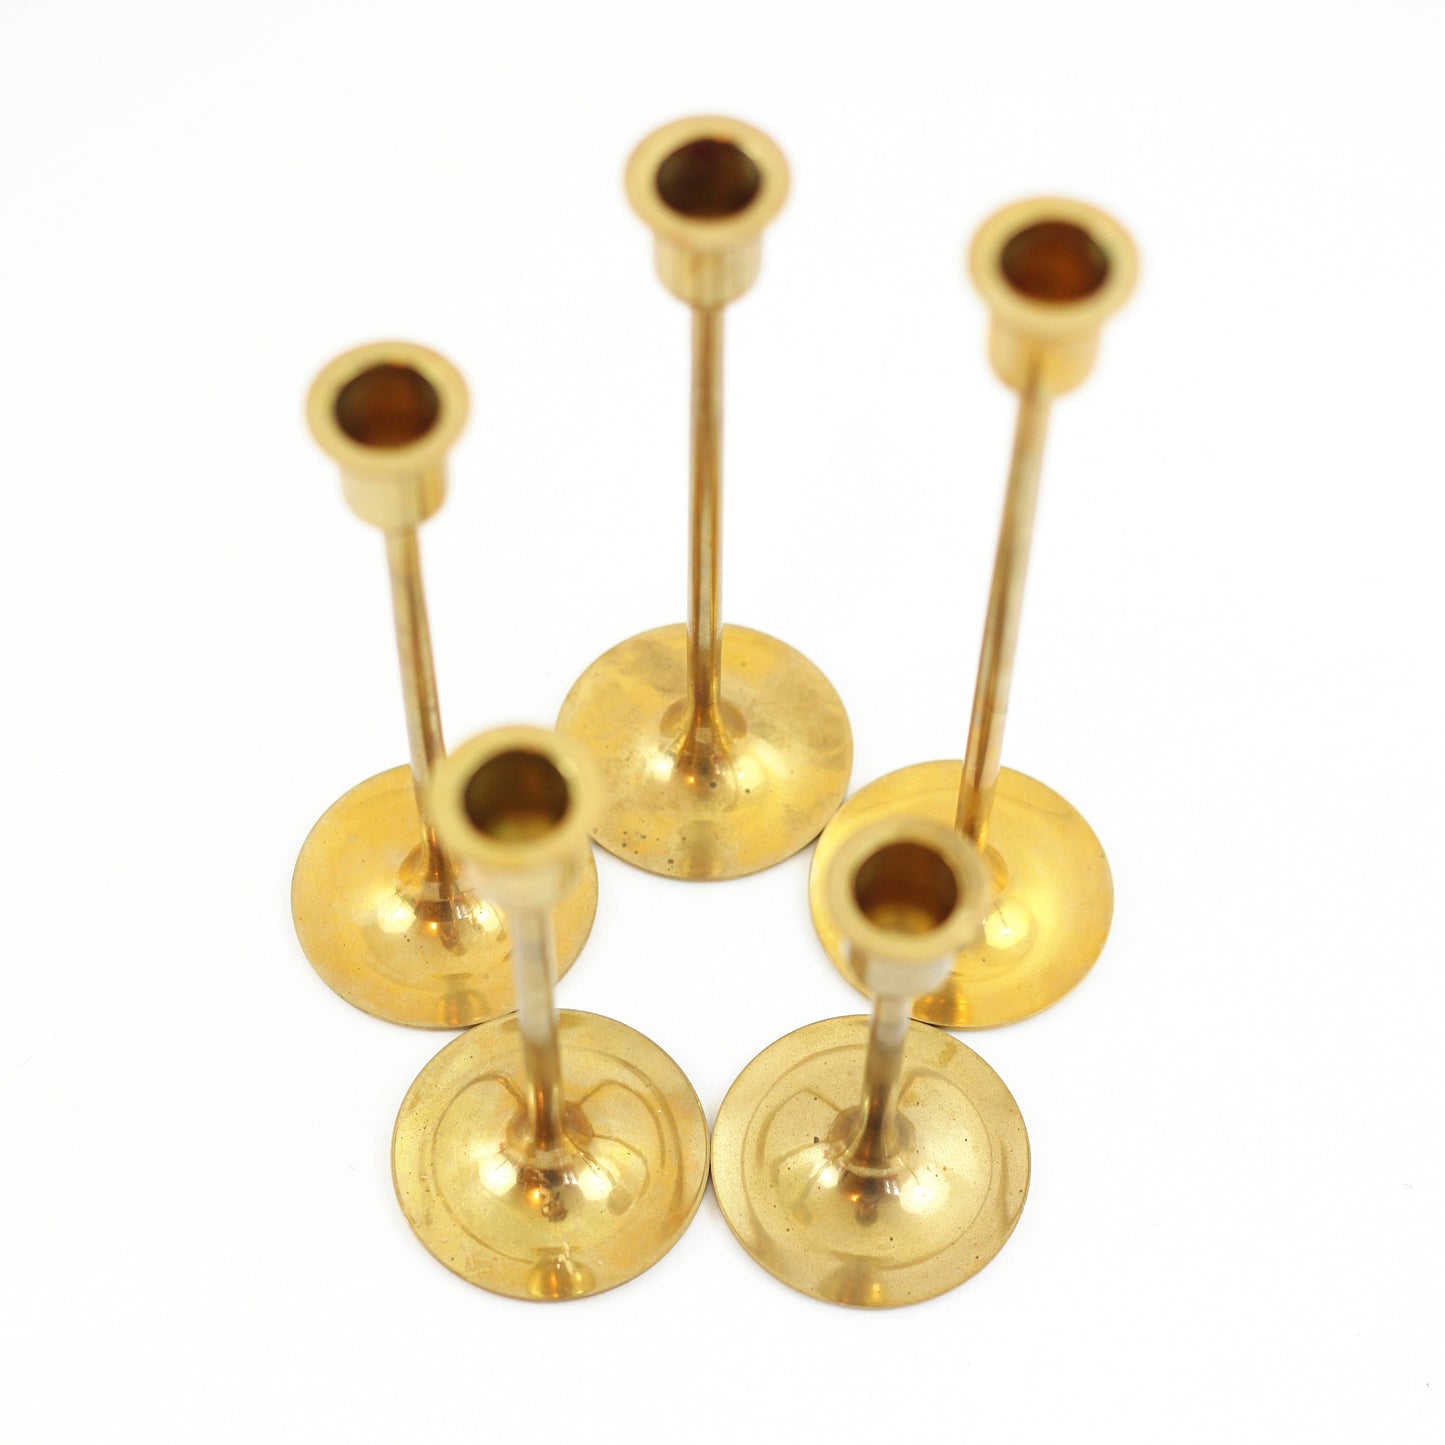 SOLD - Mid Century Graduated Brass Candlesticks